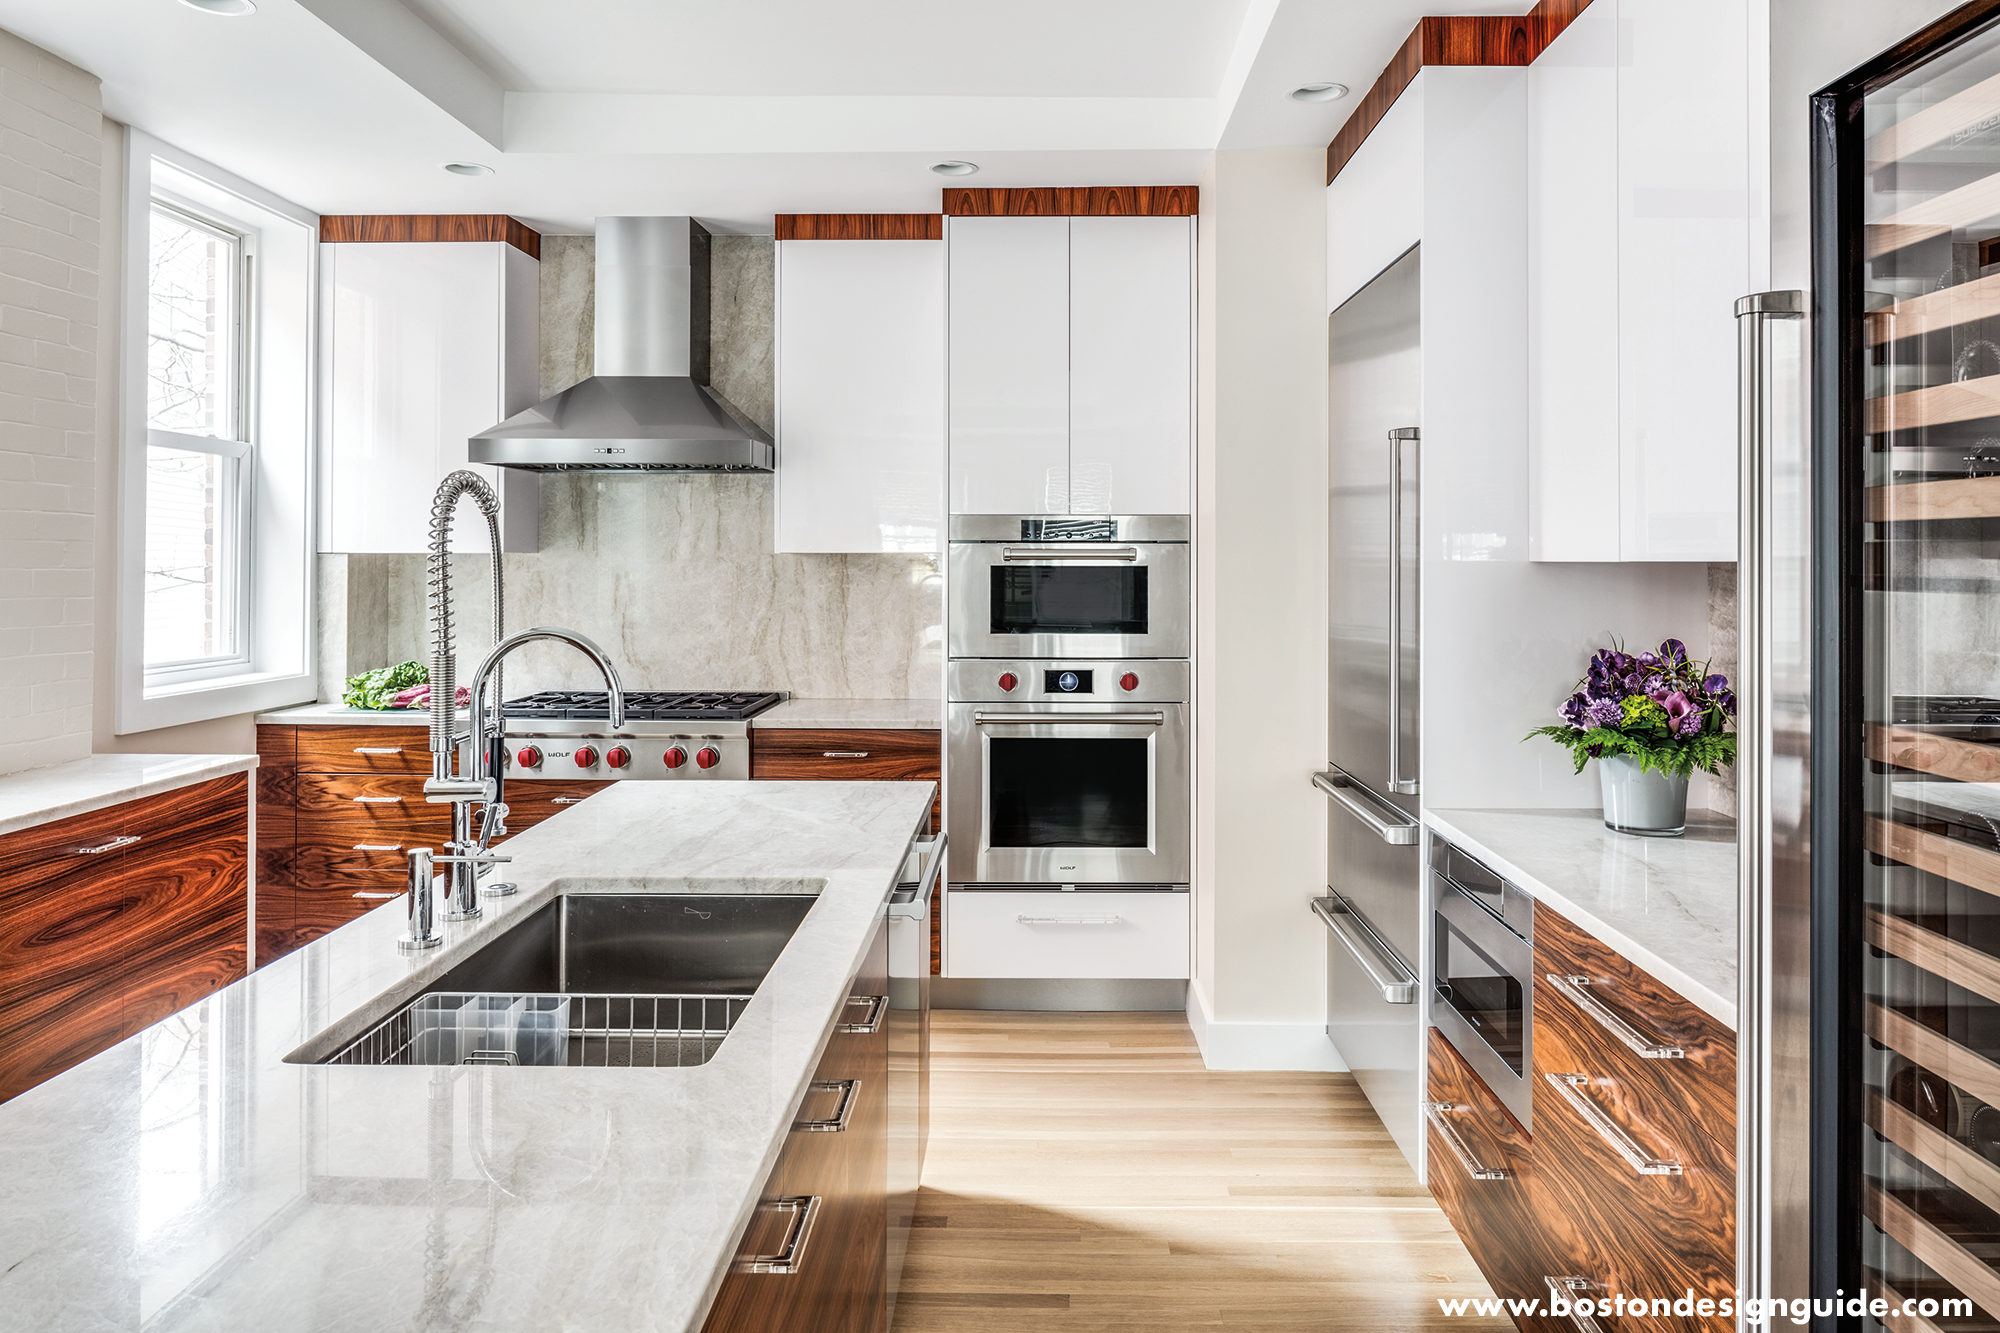 newton kitchens & design | boston design guide